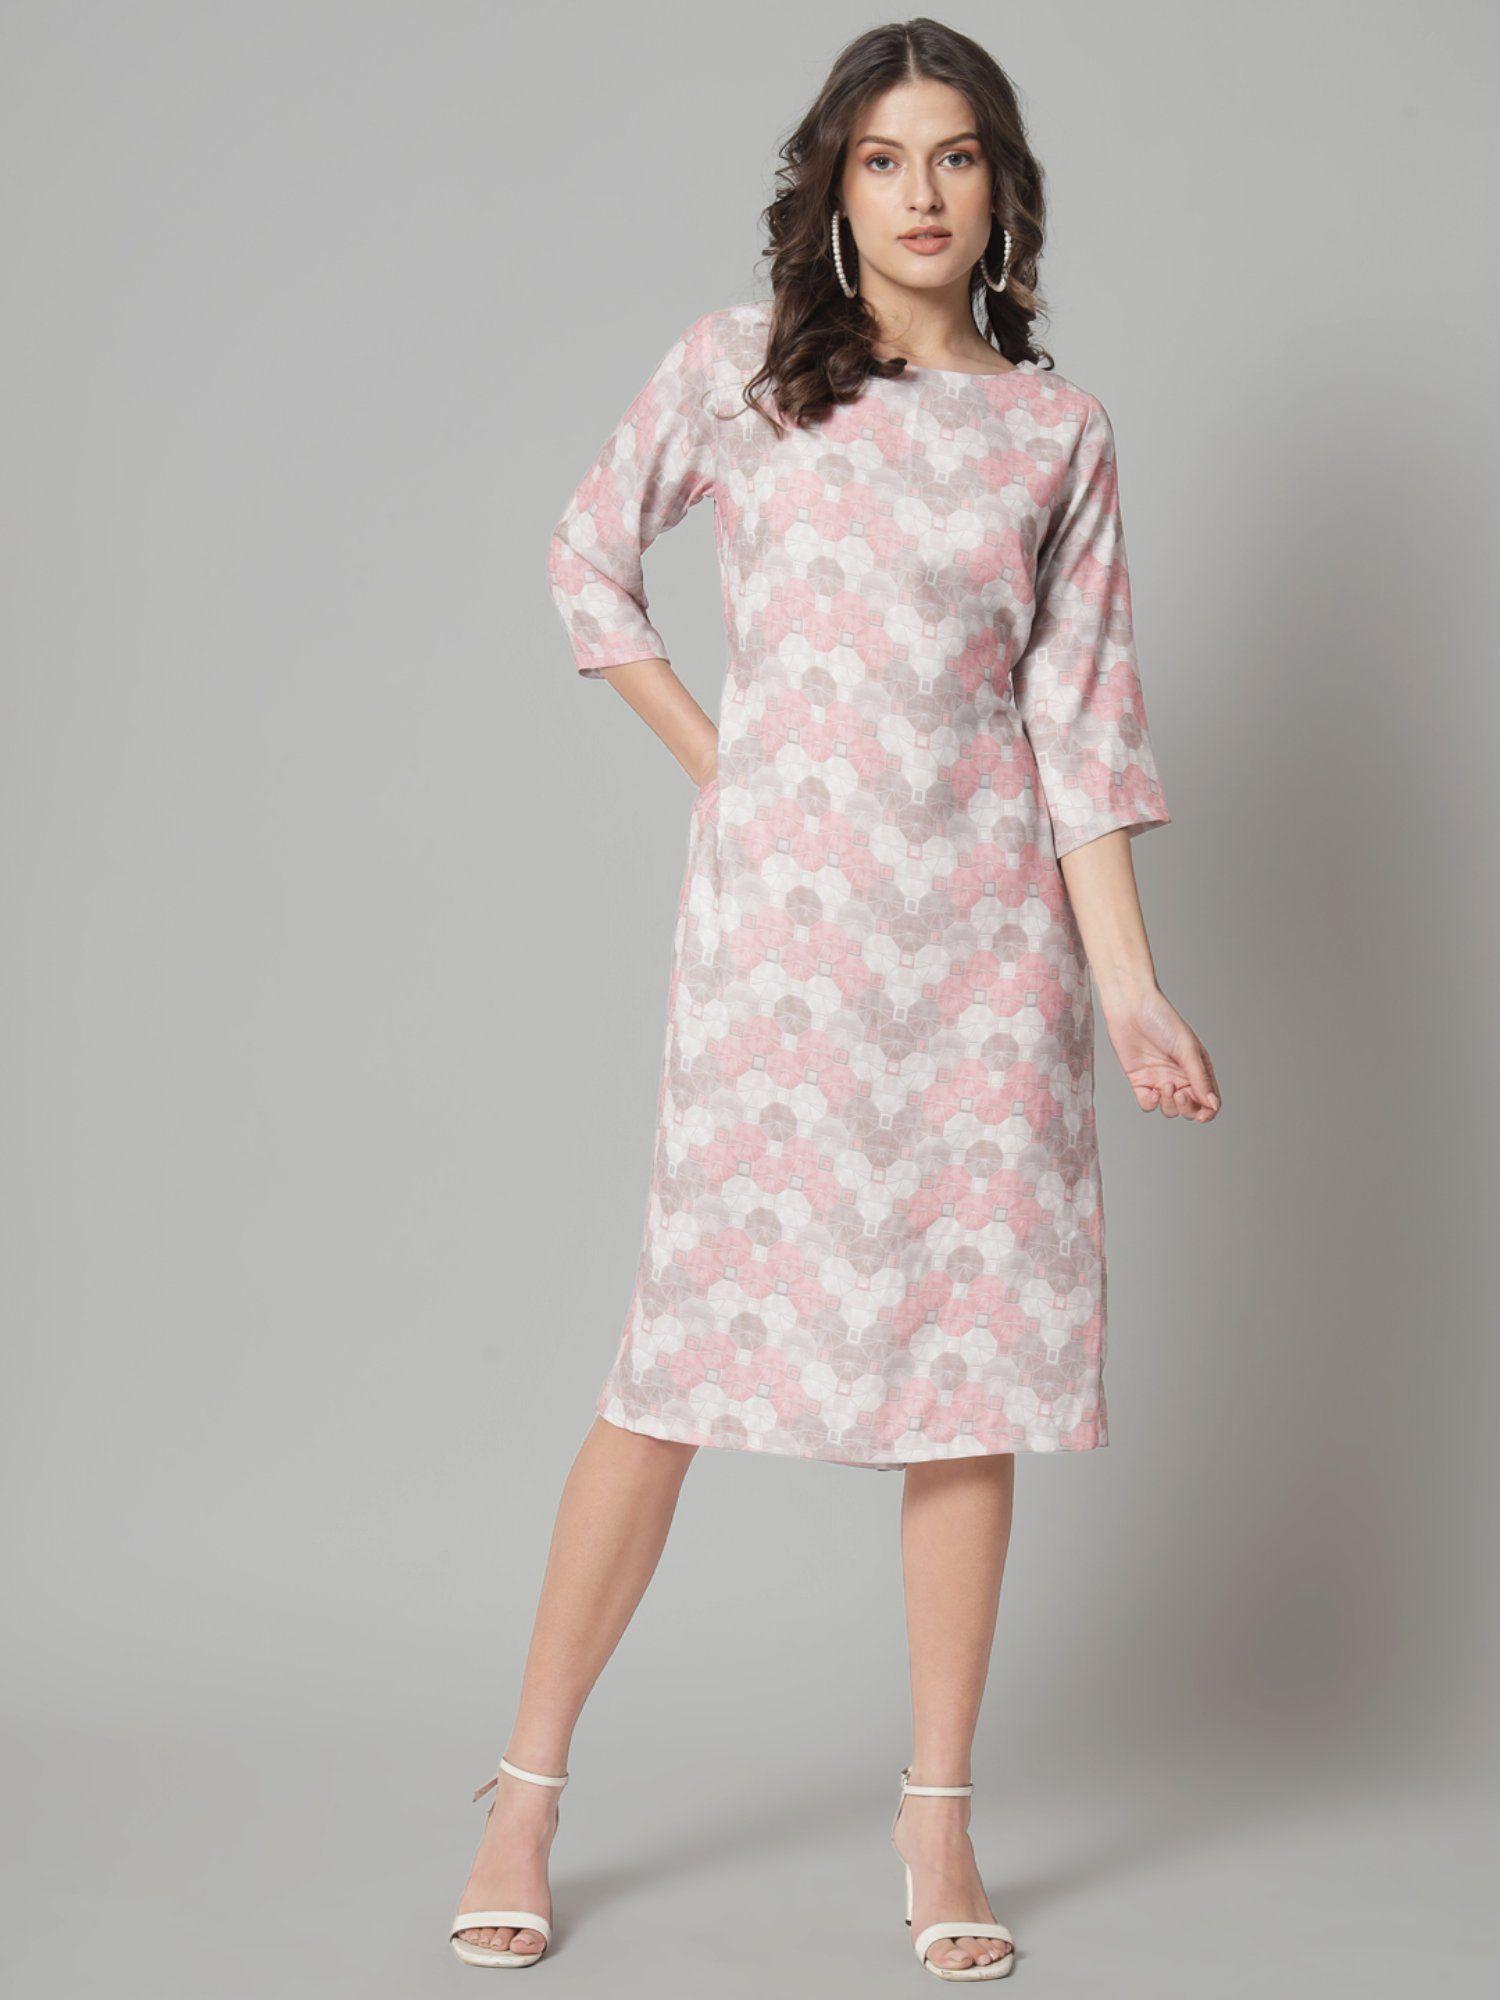 printed sheath dress - pink